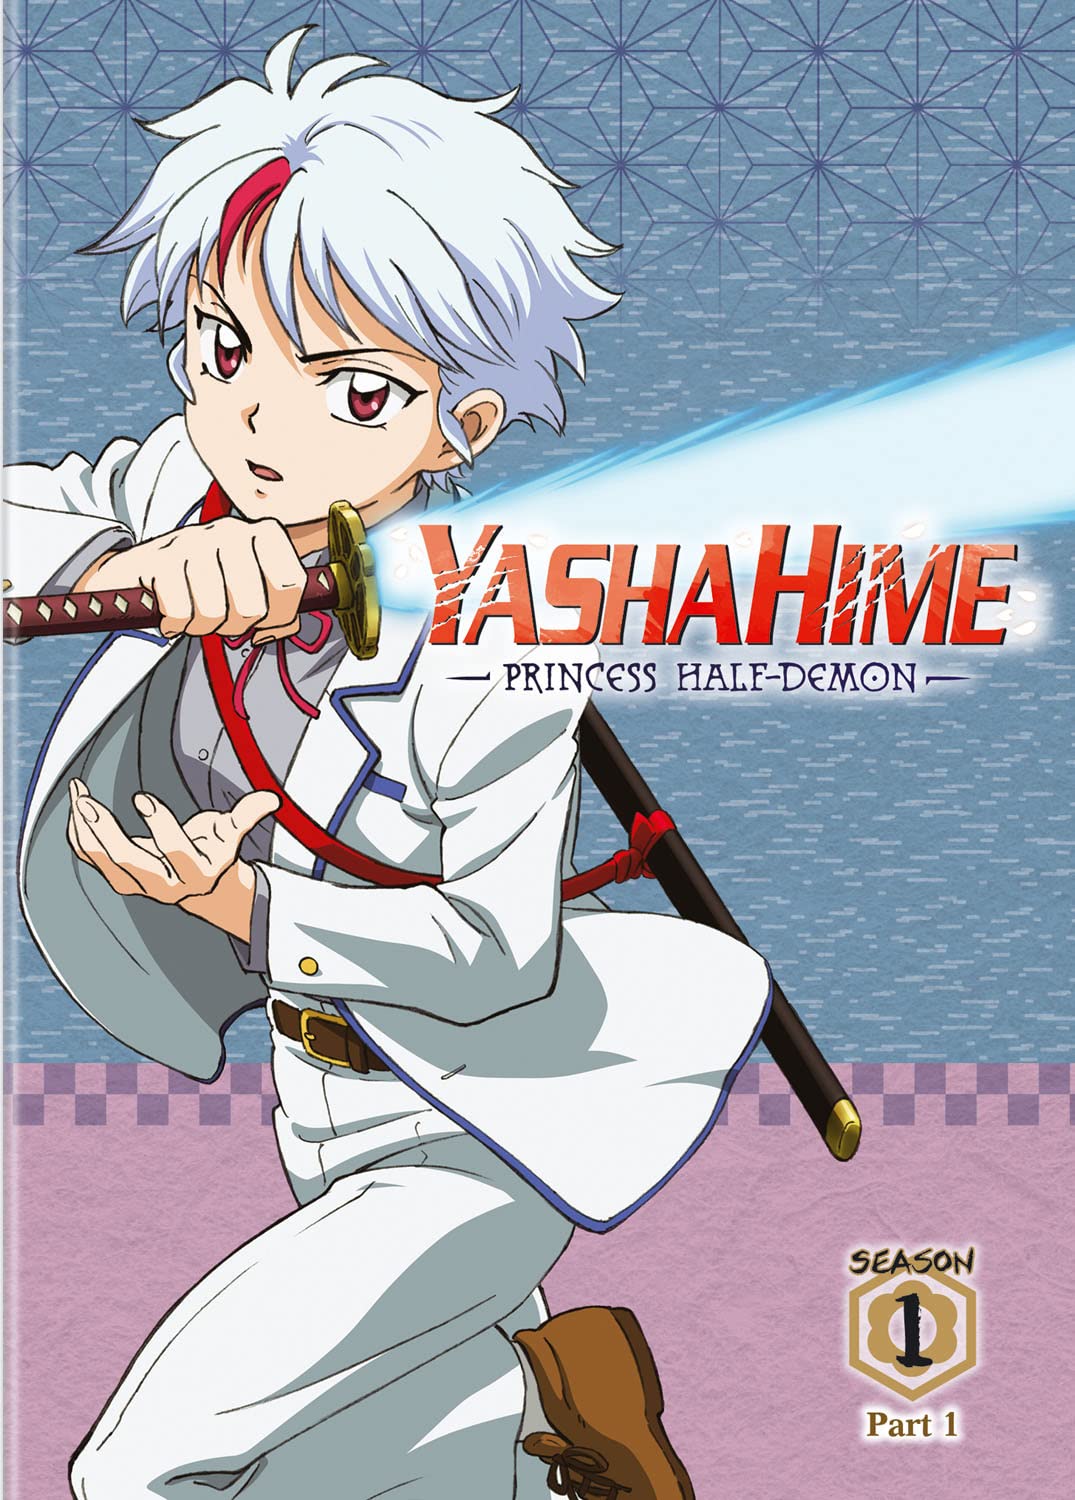 Yashahime: Princess Half-demon - Season 1, Part 1 - DVD [ 2021 ]  - Anime Television On DVD - TV Shows On GRUV